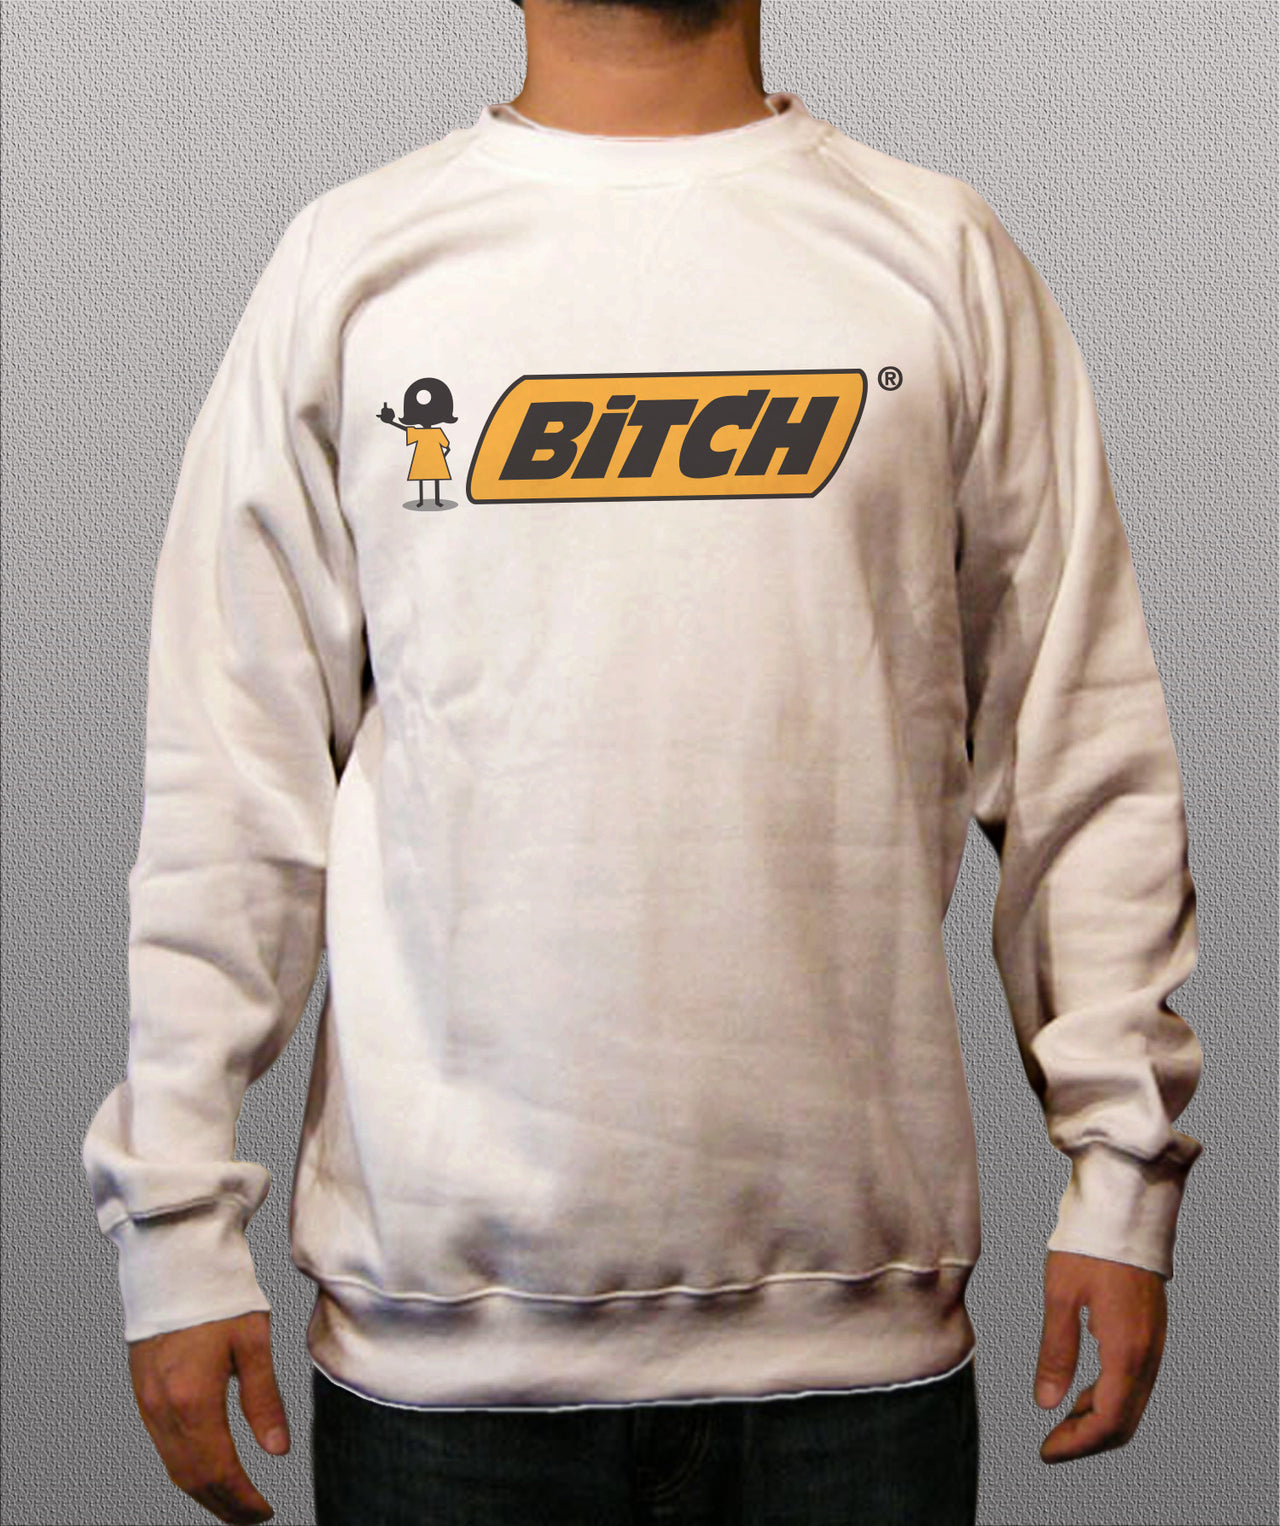 Bitched White Crewneck Sweatshirt - TshirtNow.net - 1